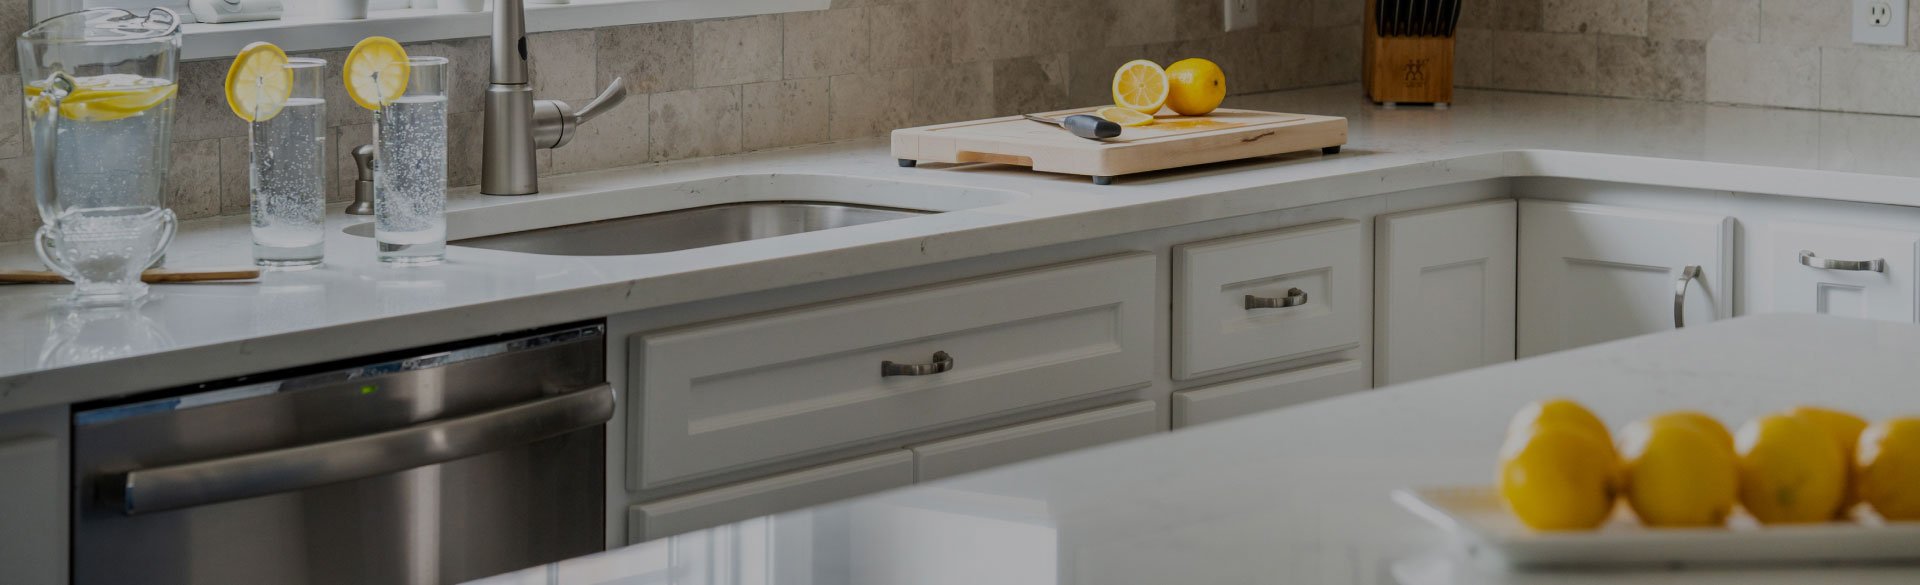 modern and stylish kitchen countertop designs